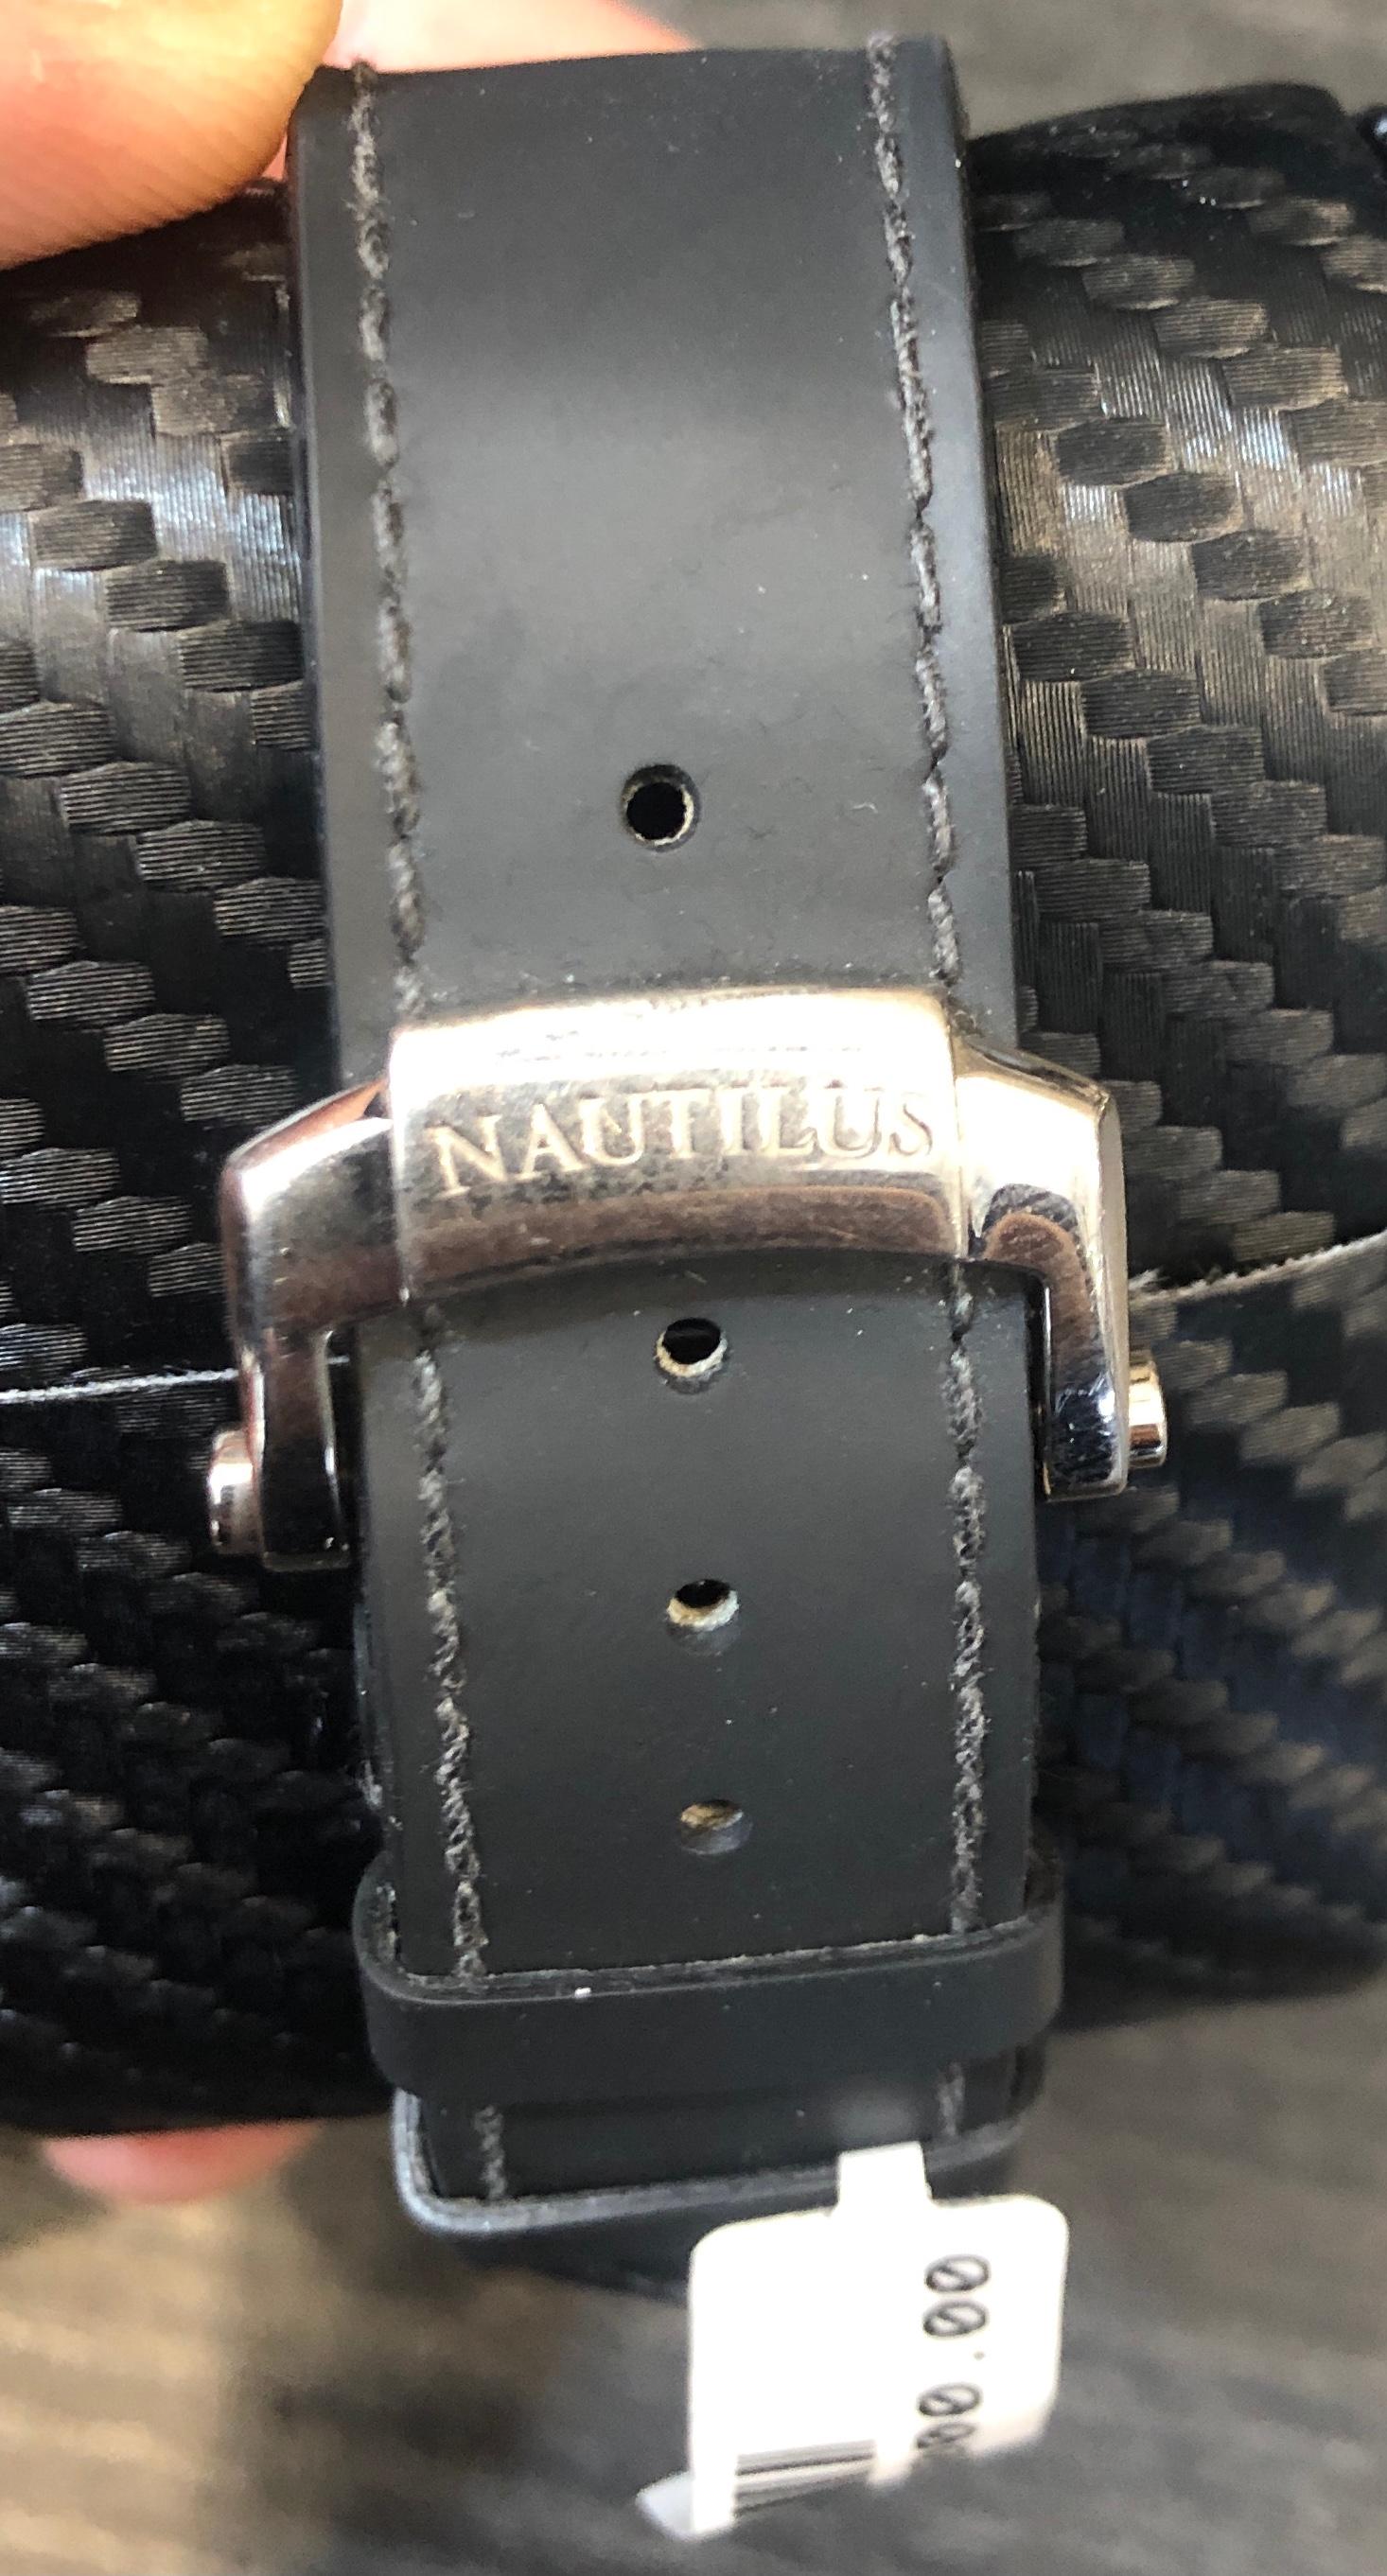 Patek Philippe Nautilus Gray Men's Watch - 5711G-001 For Sale at ...